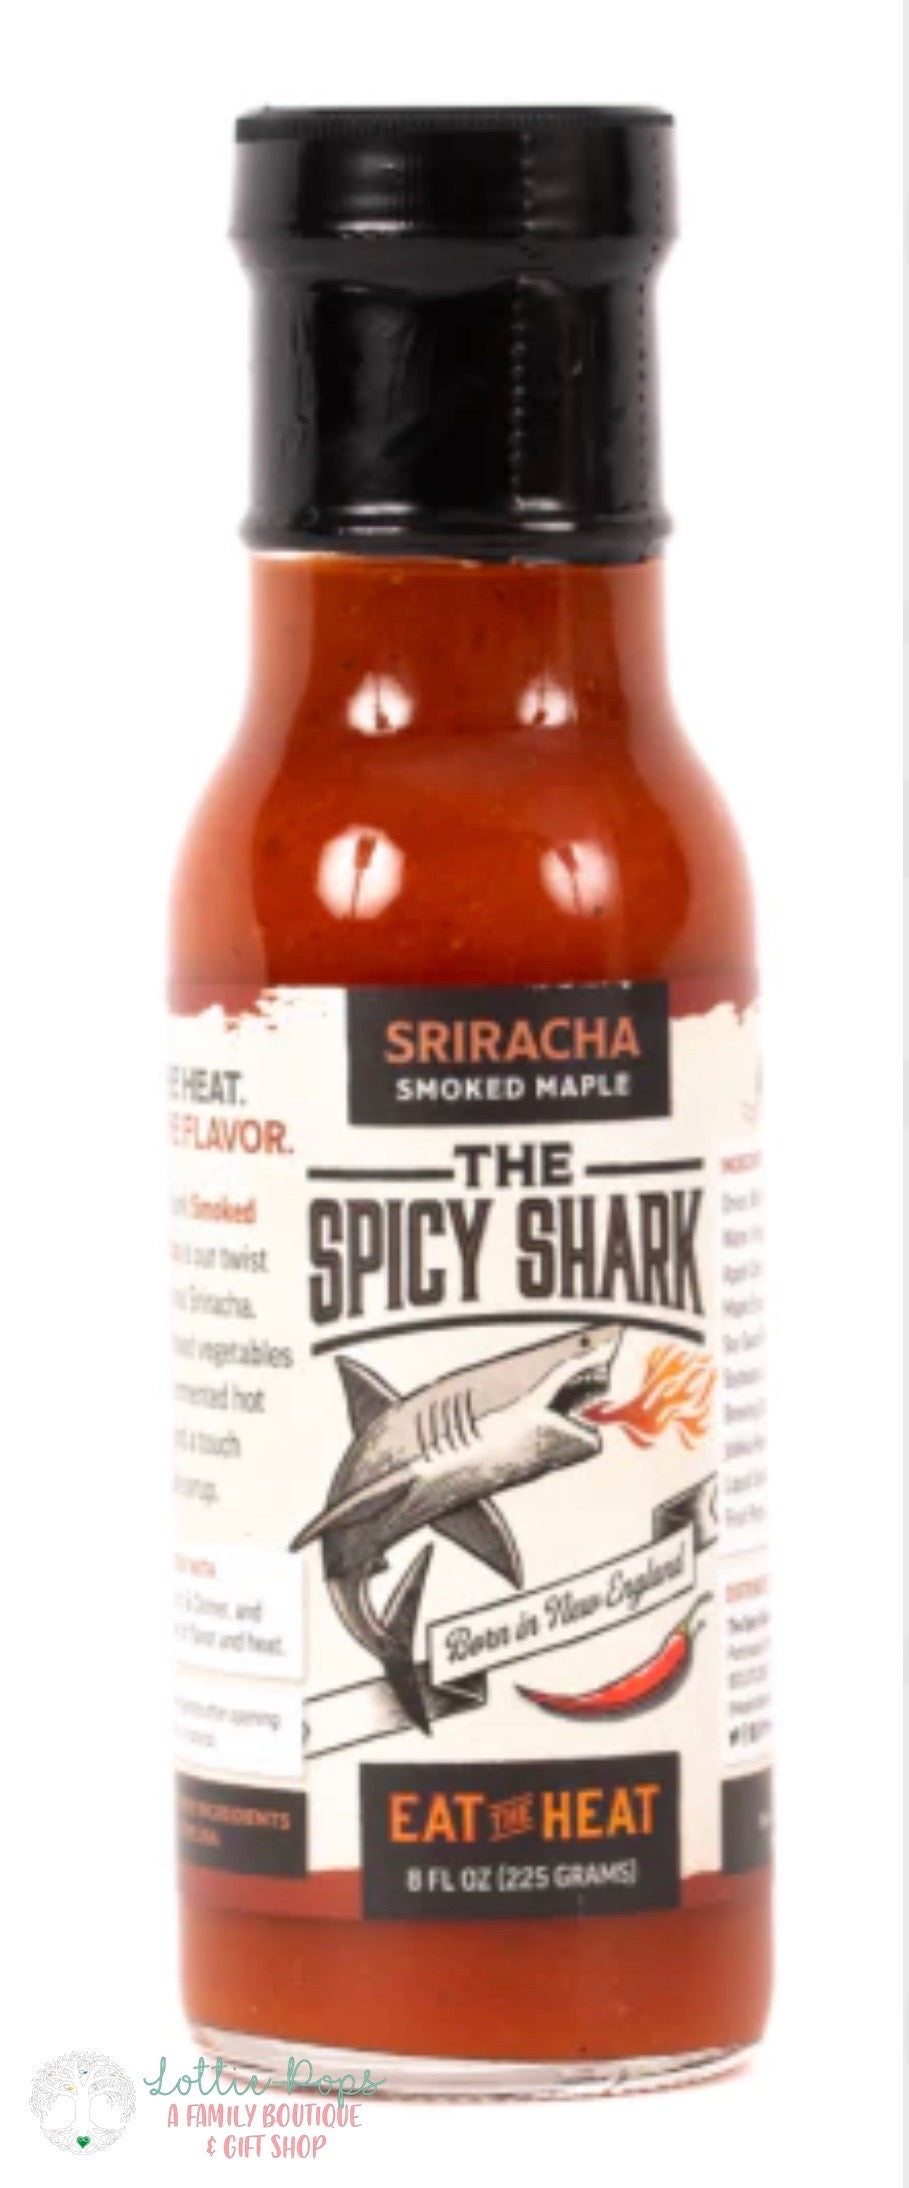 The Spicy Shark Smoked Maple Sriracha 8oz bottle